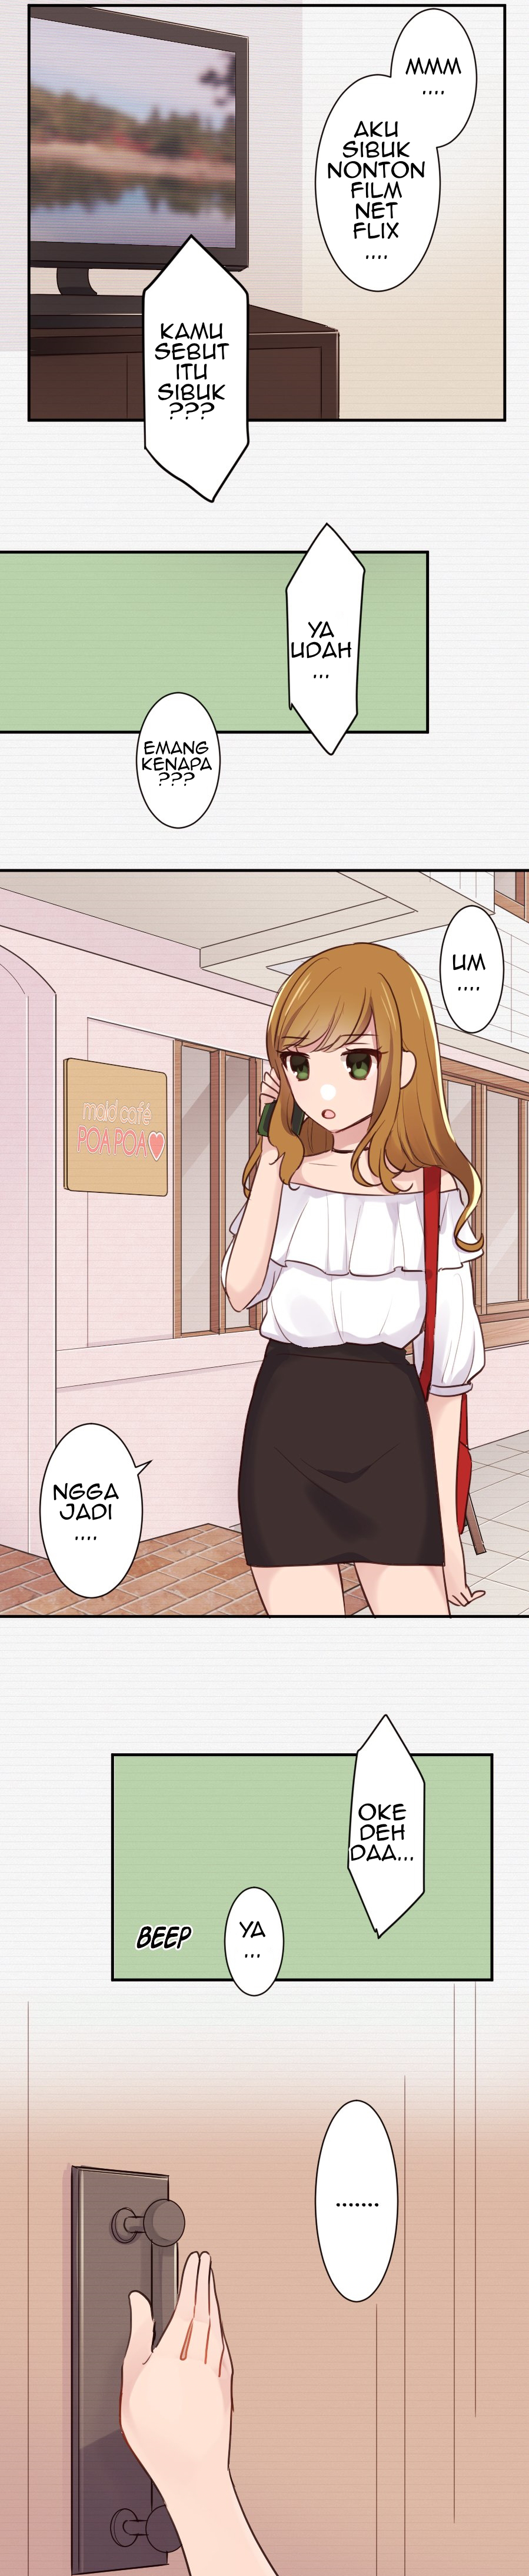 Class Maid (shimamura) Chapter 20